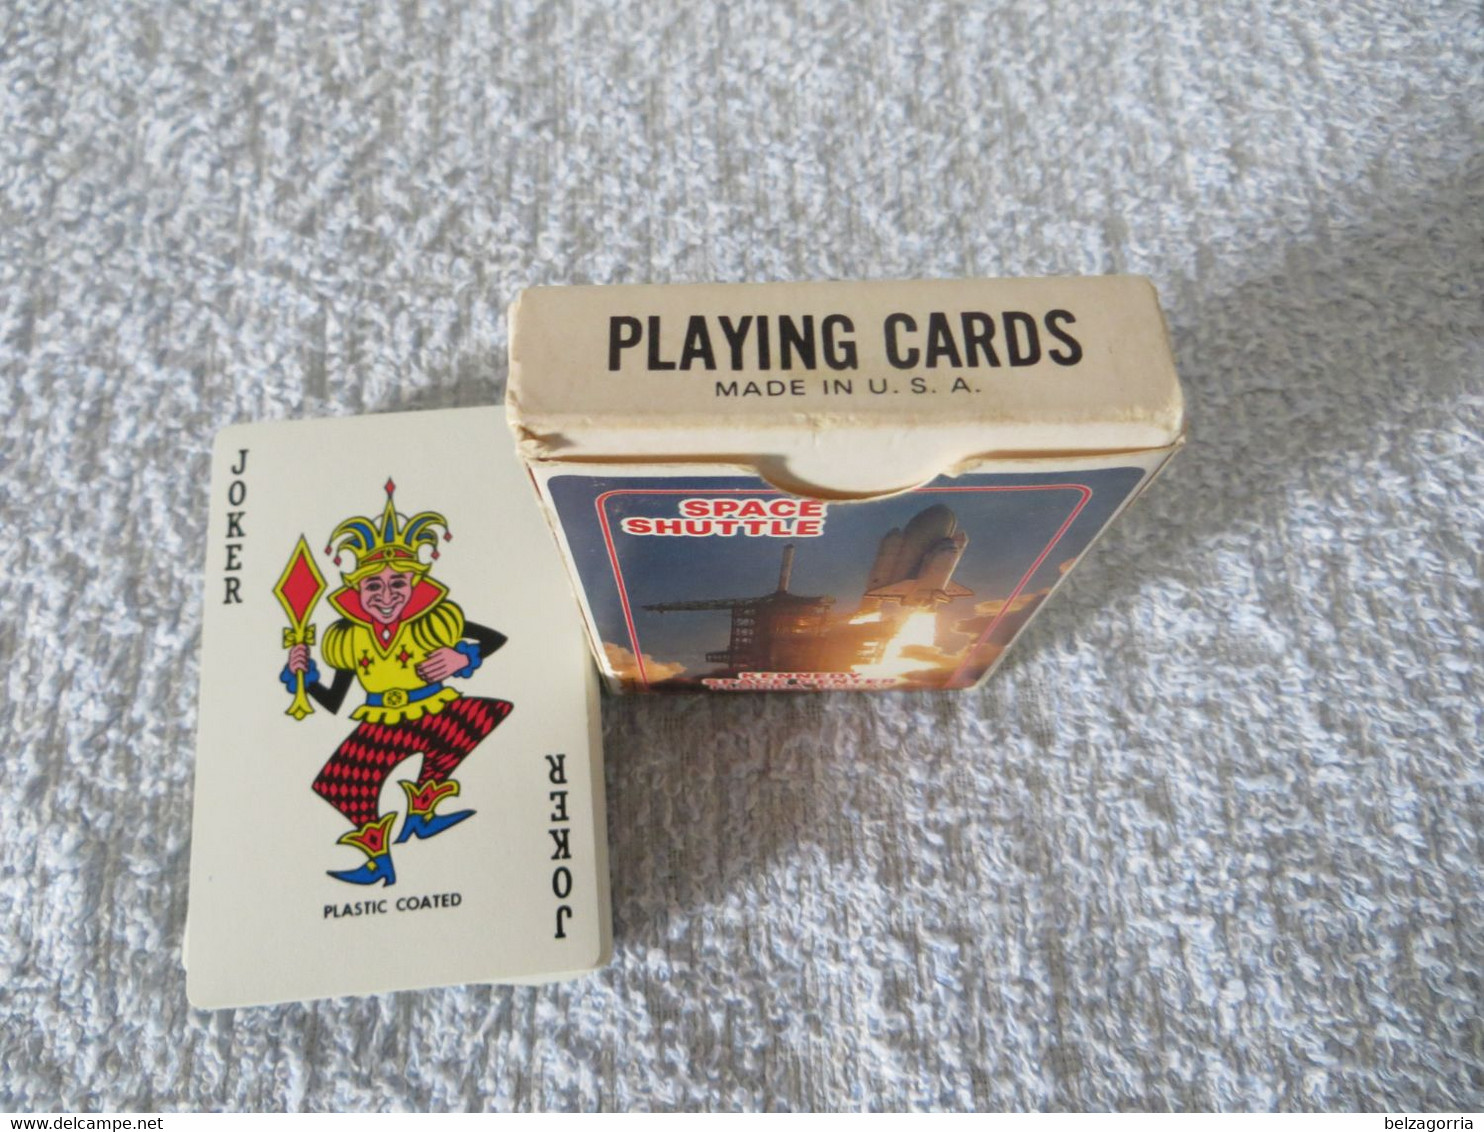 JEUX DE CARTE ( PLAYING CARDS ) - KENNEDY SPACE CENTER FLORIDA U.S.A. - SPACE SHUTTLE ( Pas Courant ) VOIR SCANS - 54 Cards